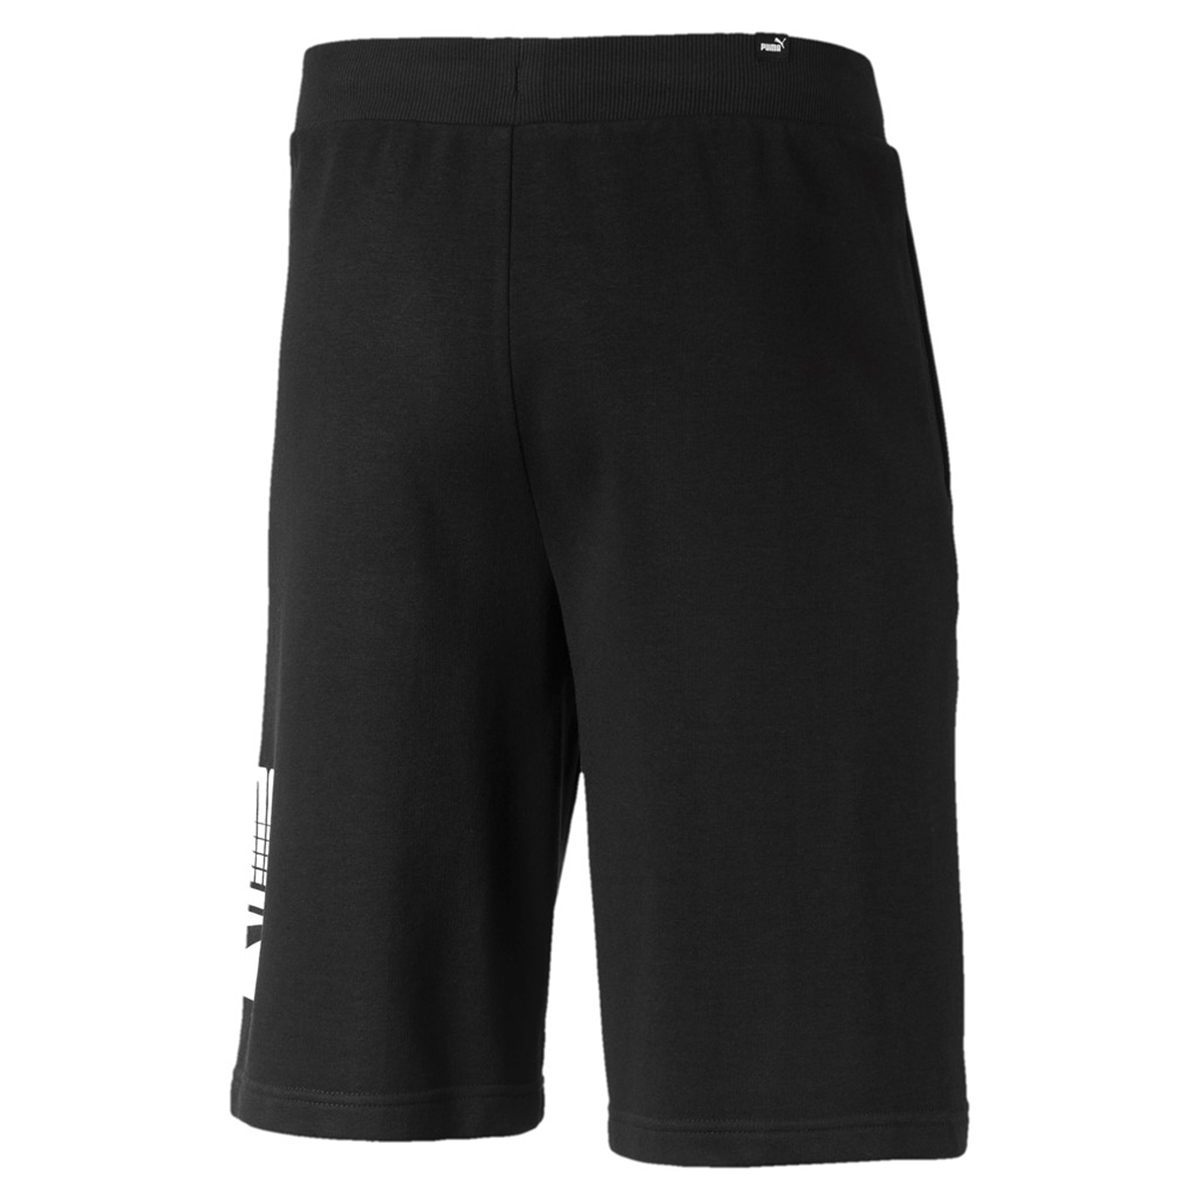 PUMA Herren Rebel Shorts 9" Hose Pants Sporthose Shorts schwarz 580550 